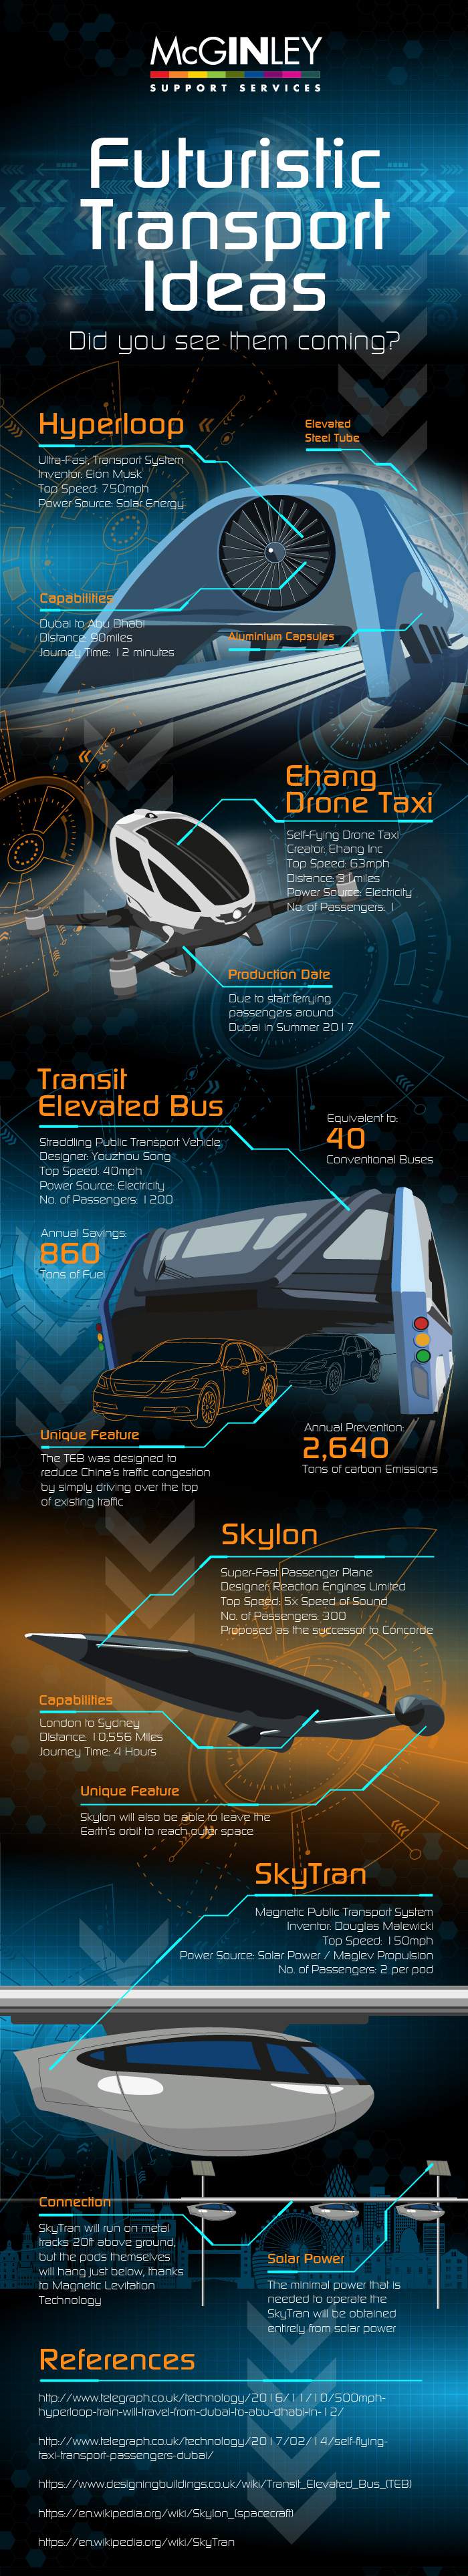 Futuristic Transport Ideas